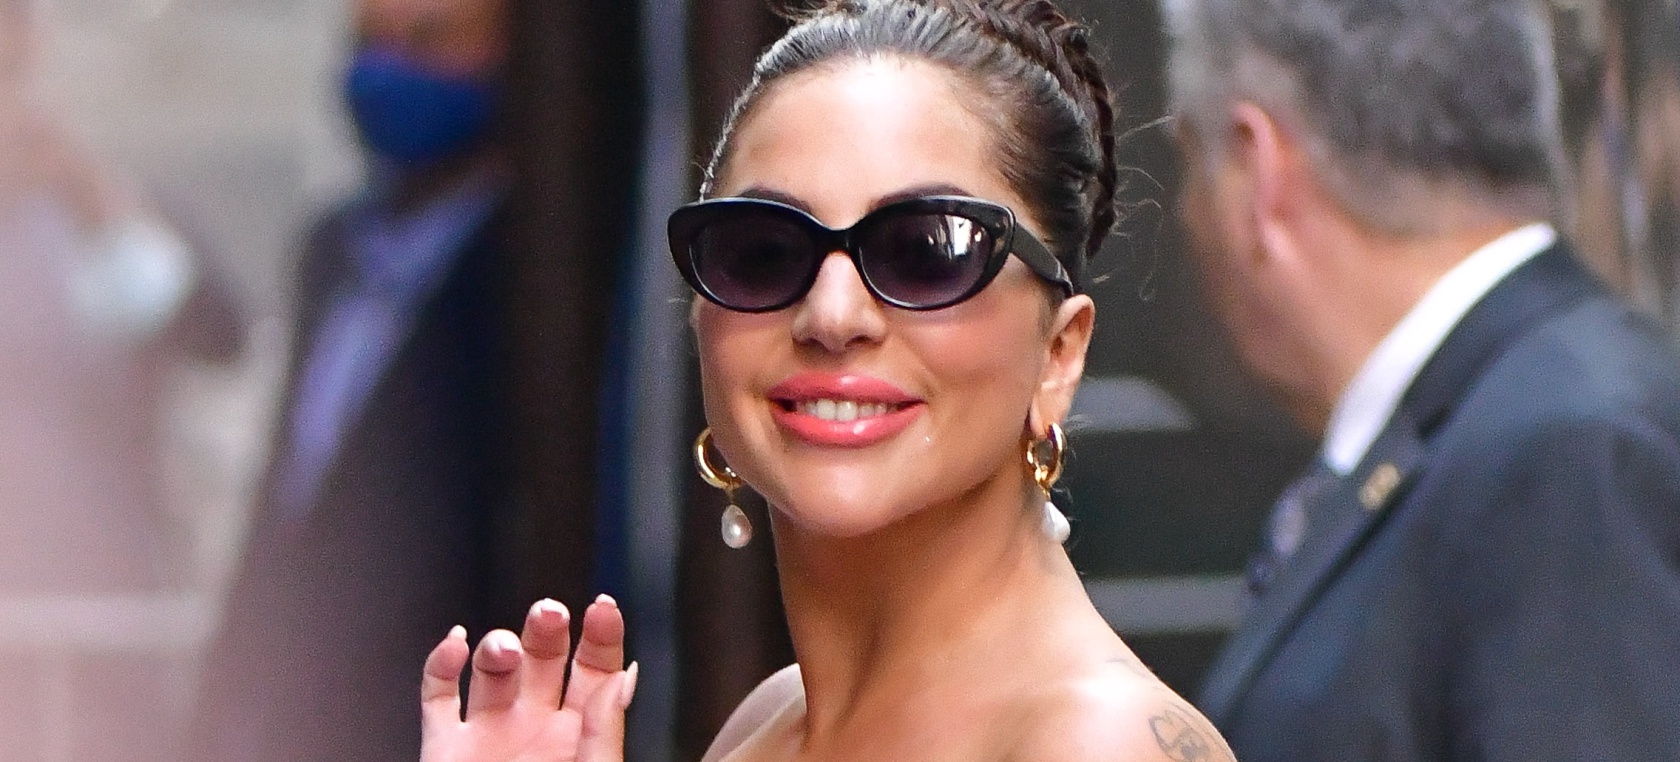 La madre de Lady Gaga revoluciona Instagram